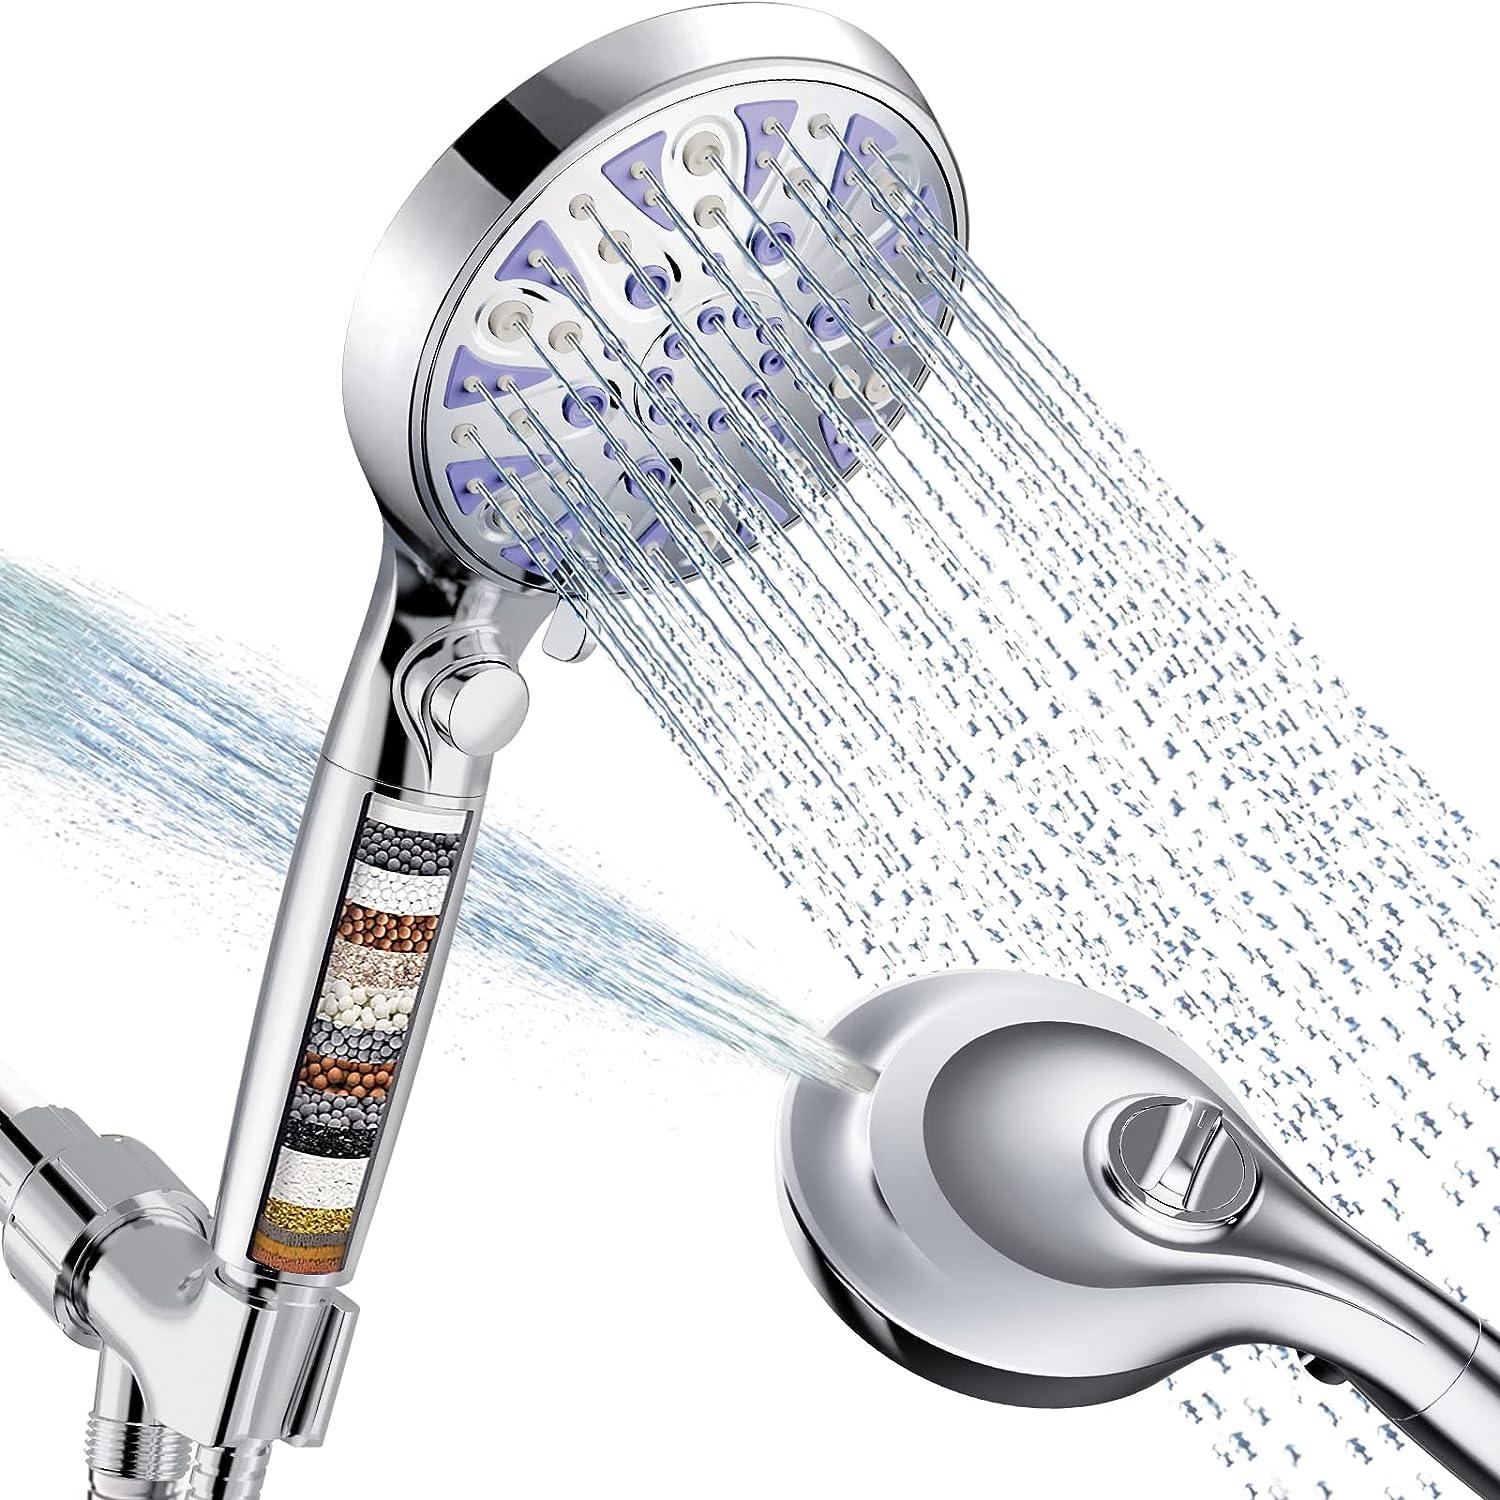 Cabezal de ducha de alta presión – cissoshop